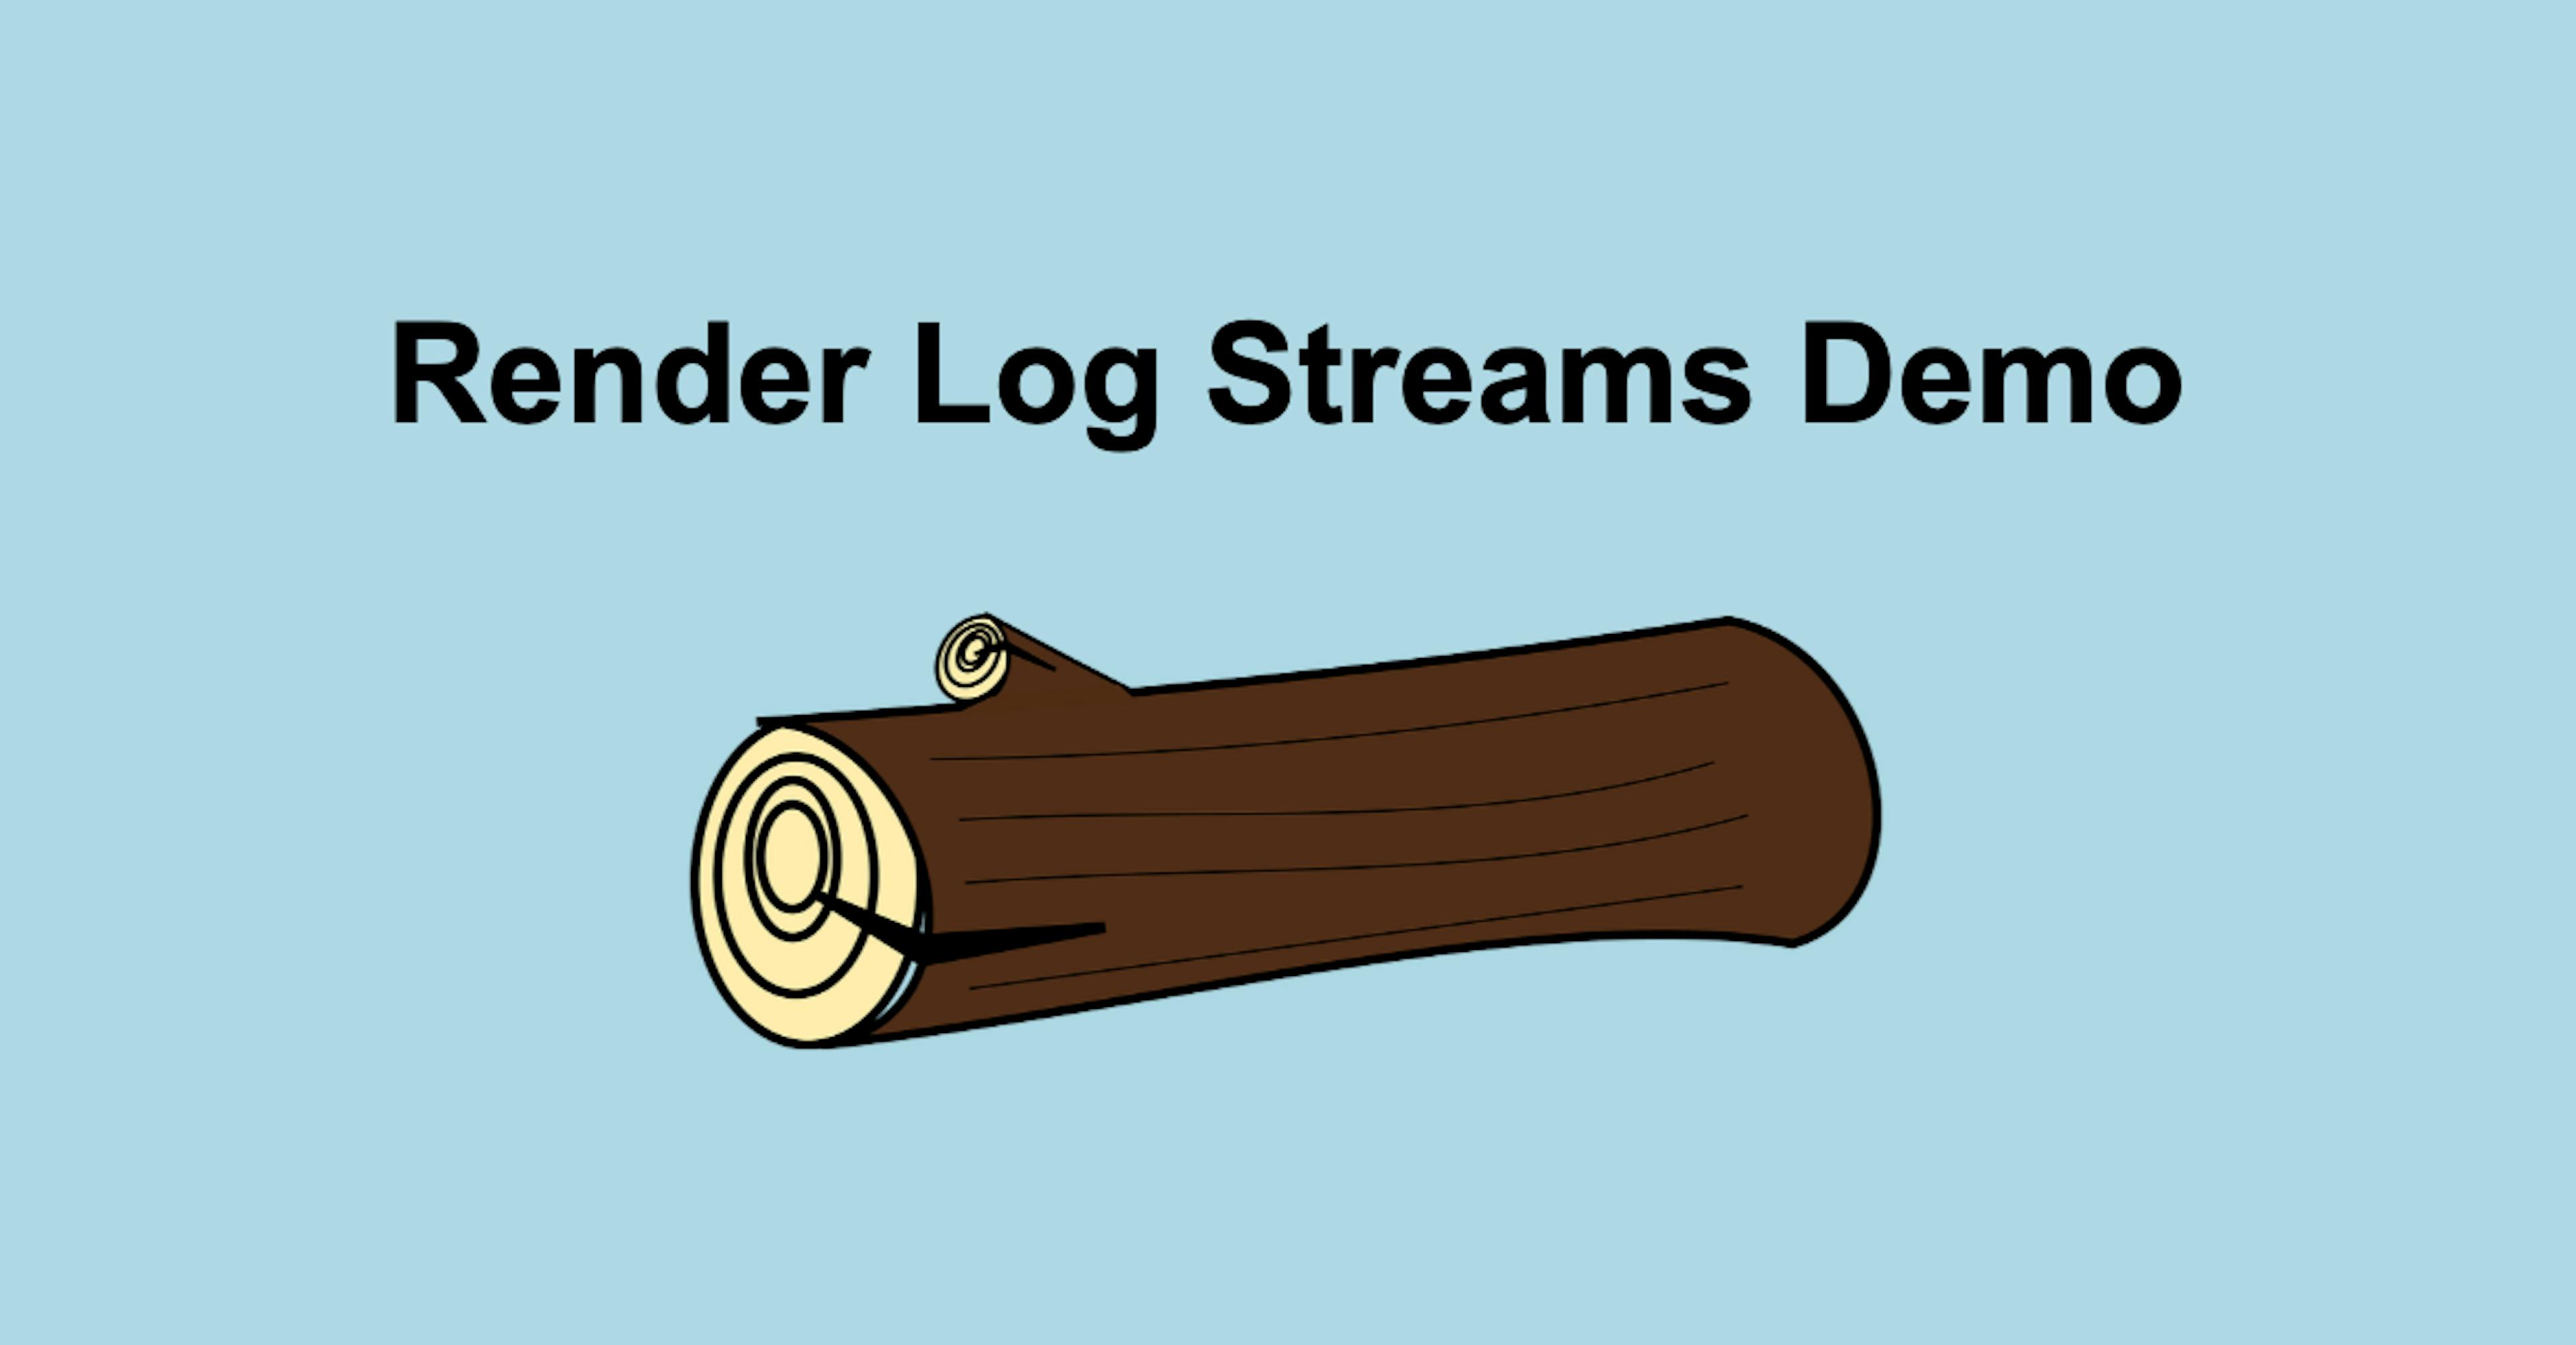 Render Log Streams demo app